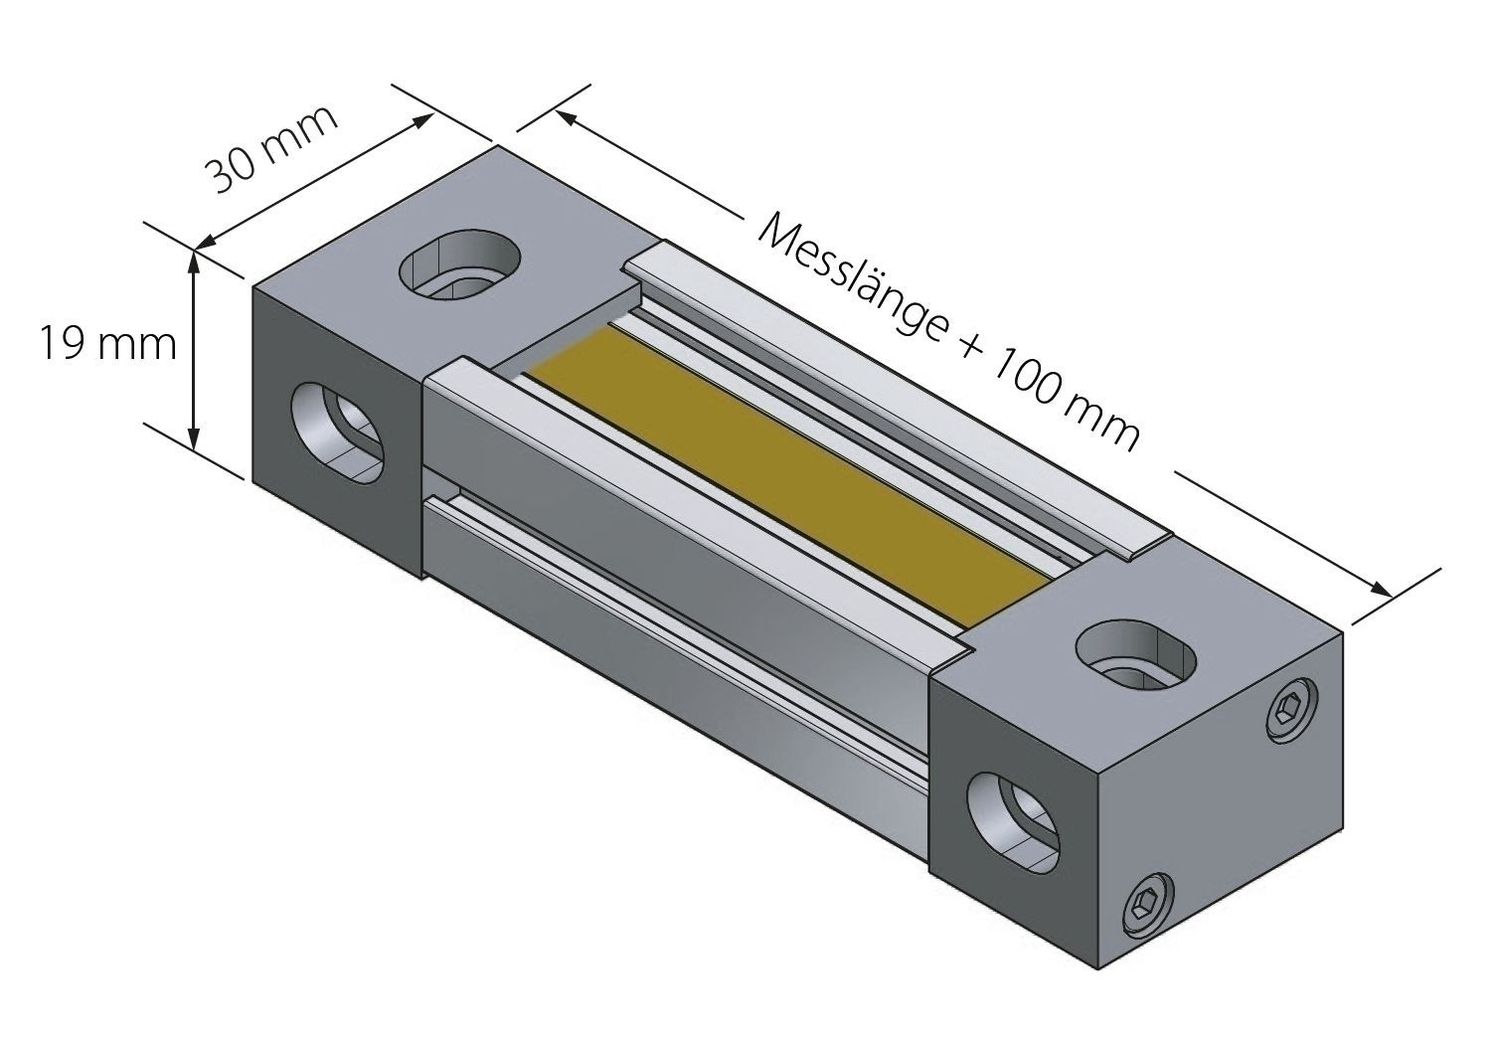 K+C Magnetmaßstab MS10A 350 mm - 5 µm | Verfahrweg 370 mm